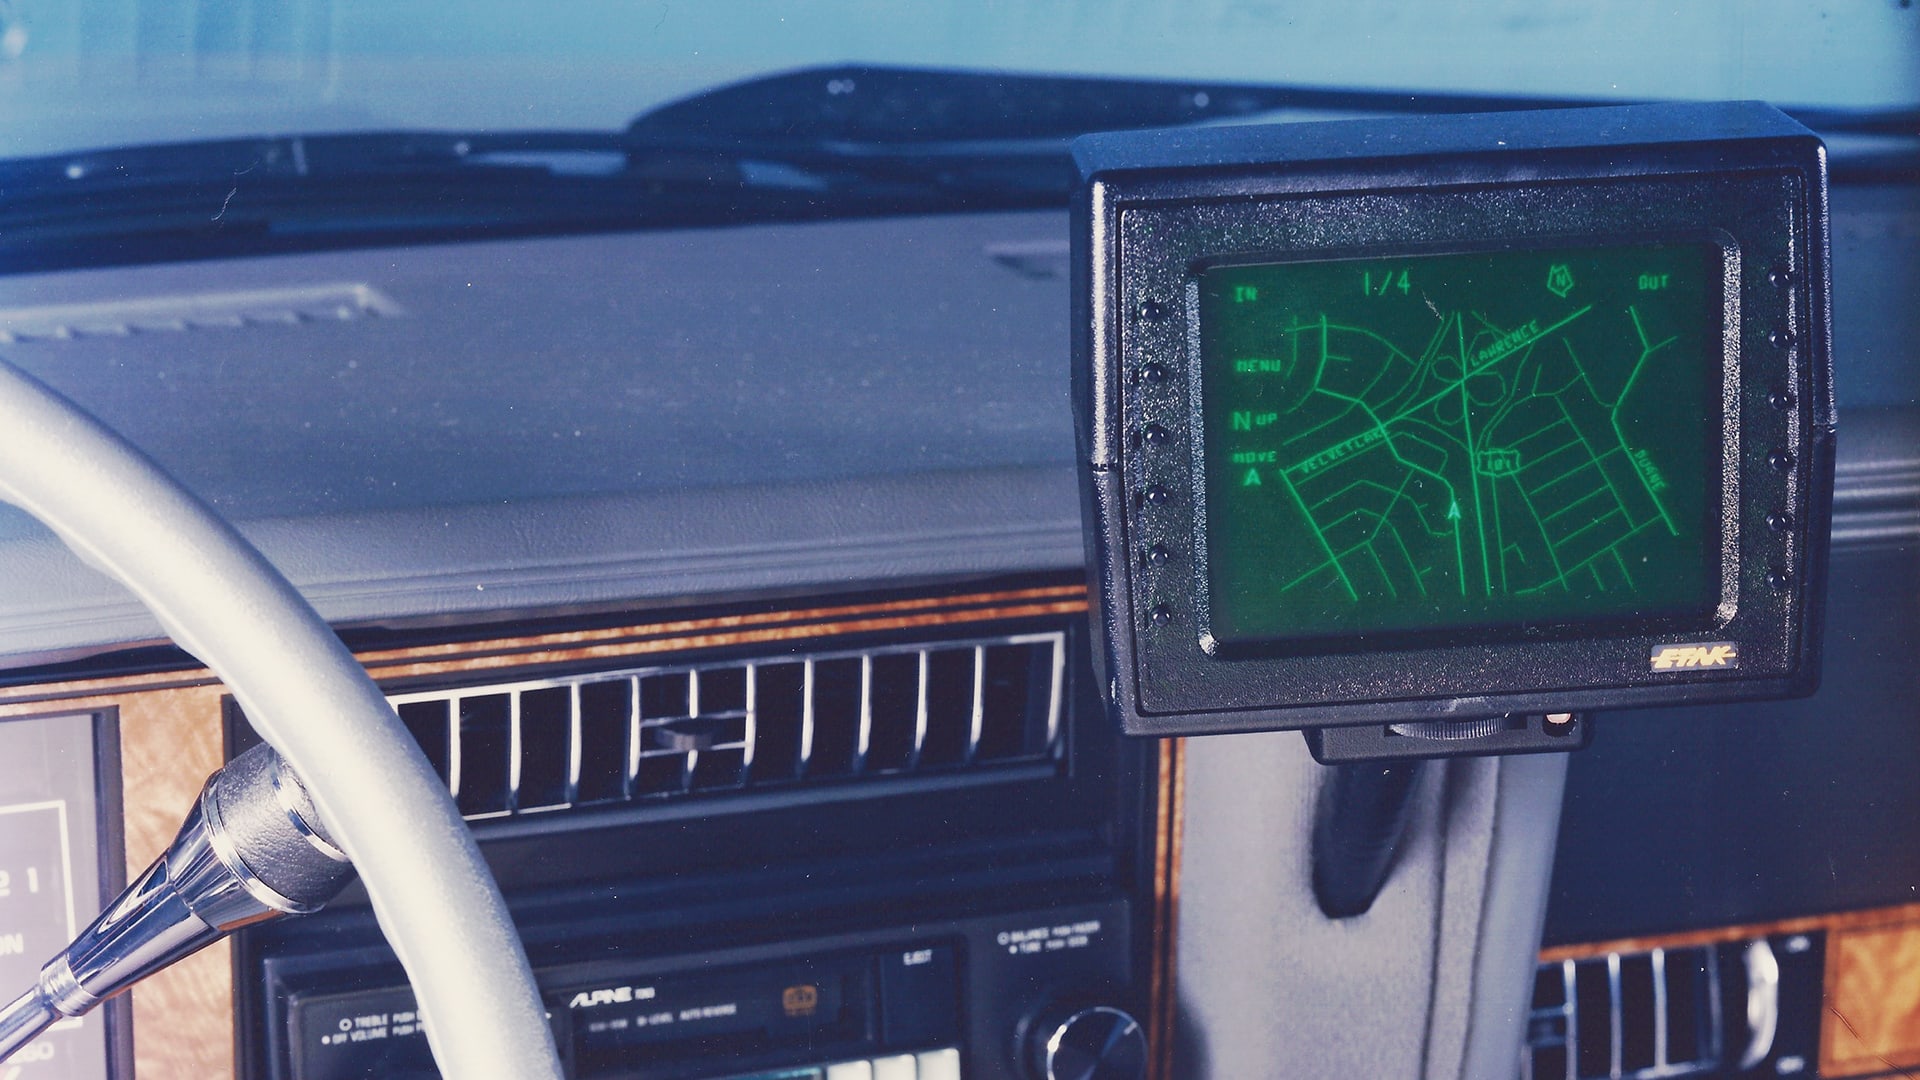 Who Needs GPS? The Forgotten Story of Etak's Amazing 1985 Car Navigation System - Fast Company